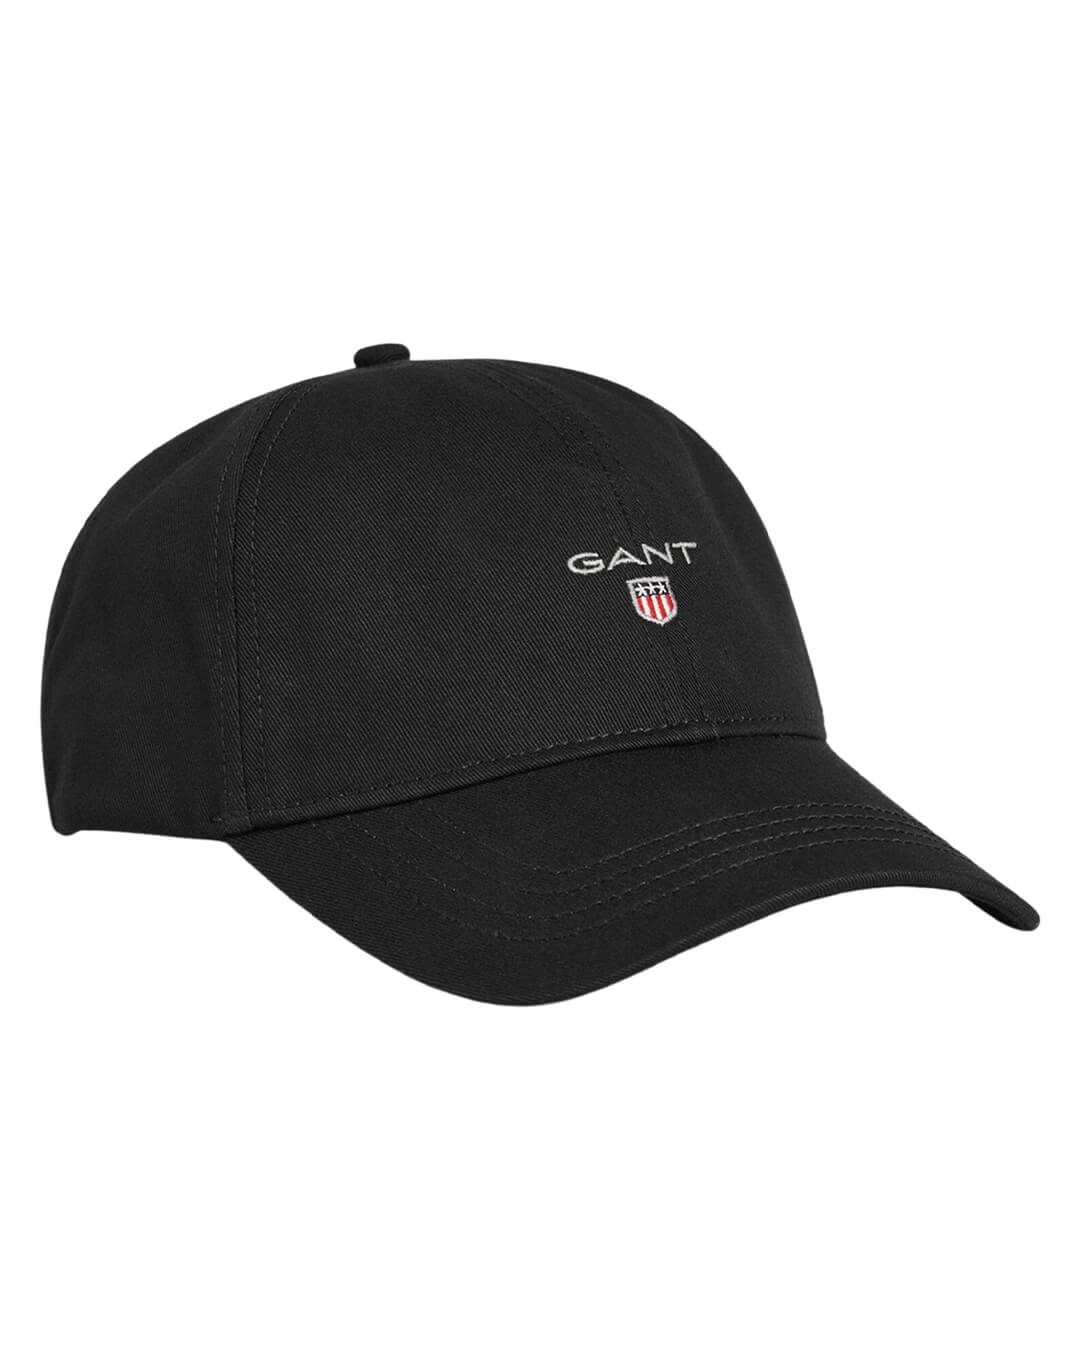 Gant Caps One Size Gant Cotton Twill Black Cap